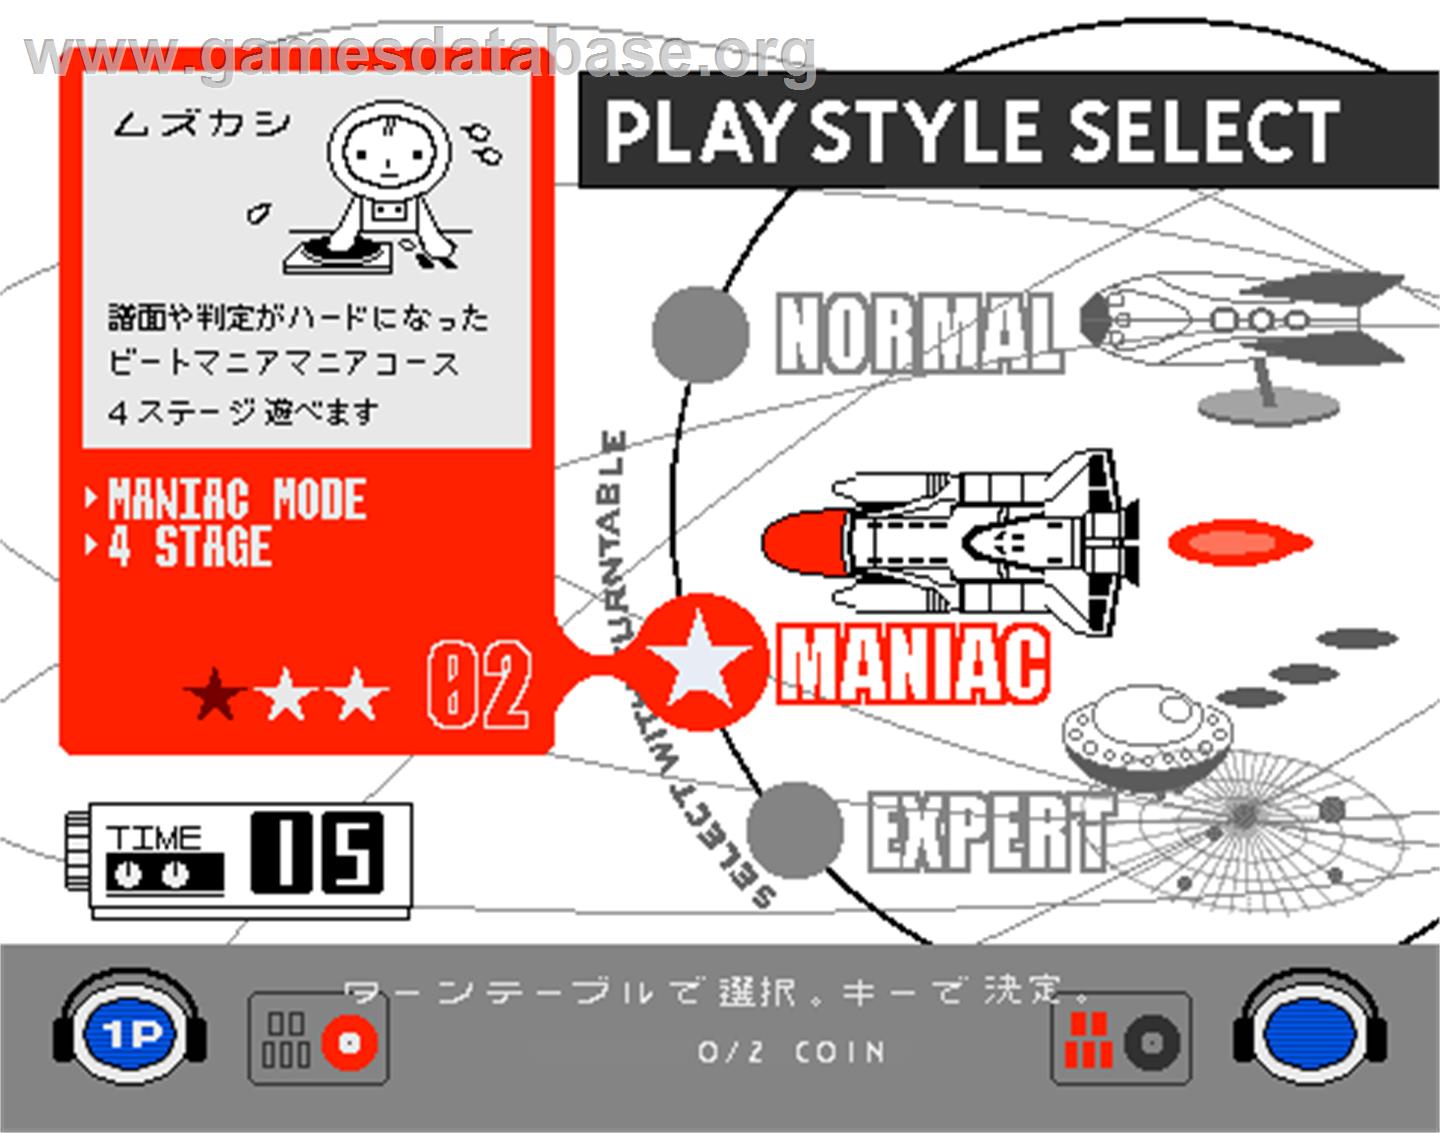 beatmania Club MIX - Arcade - Artwork - Select Screen